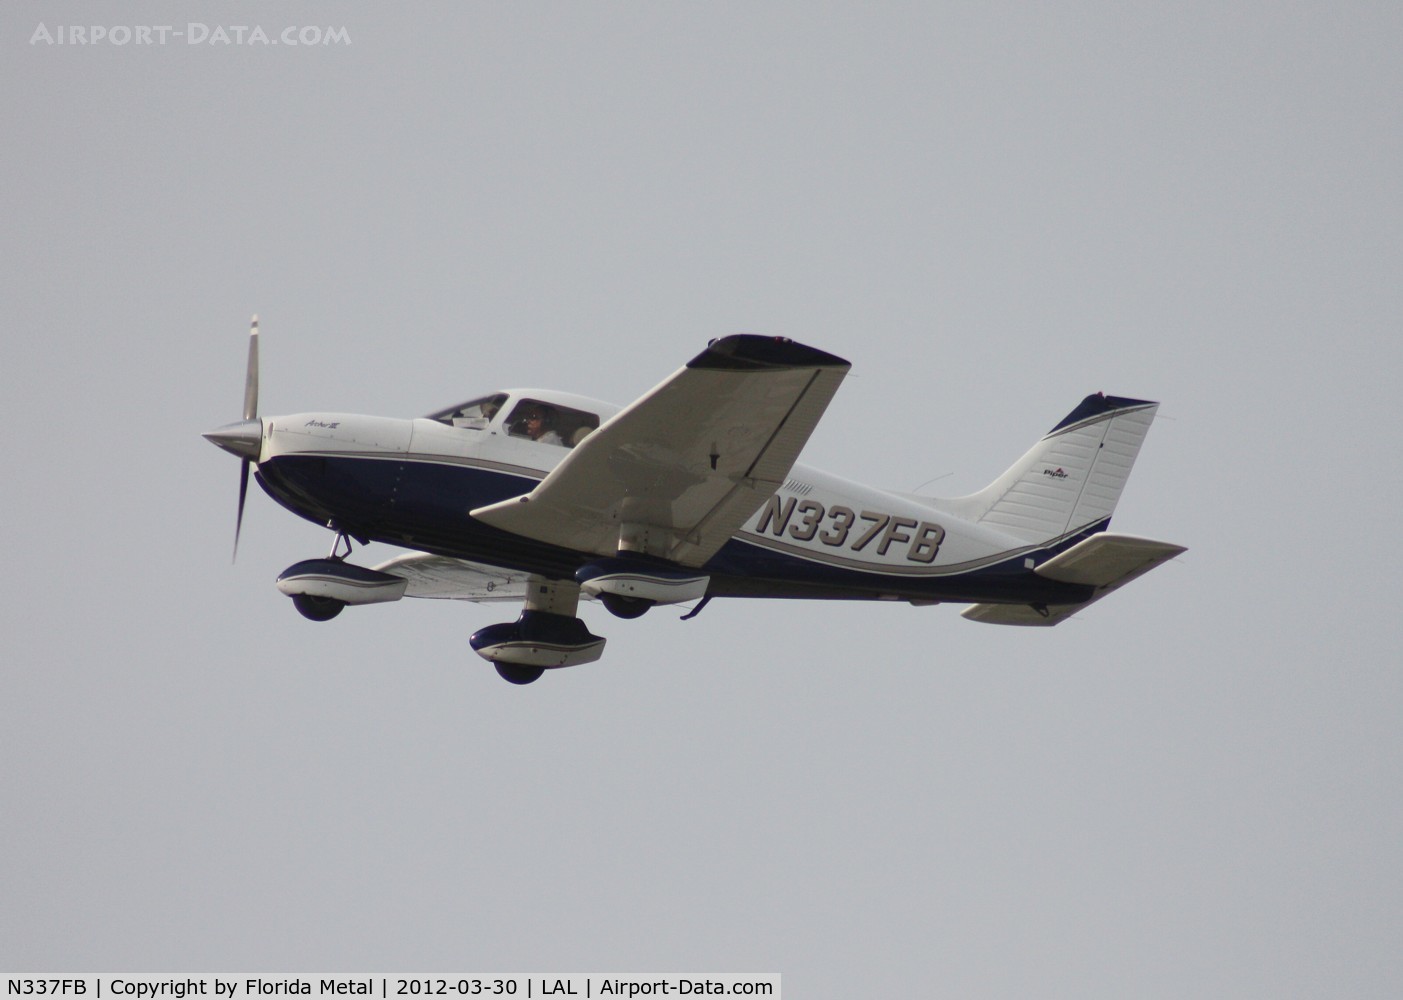 N337FB, 2003 Piper PA-28-181 C/N 2843550, PA-28-181